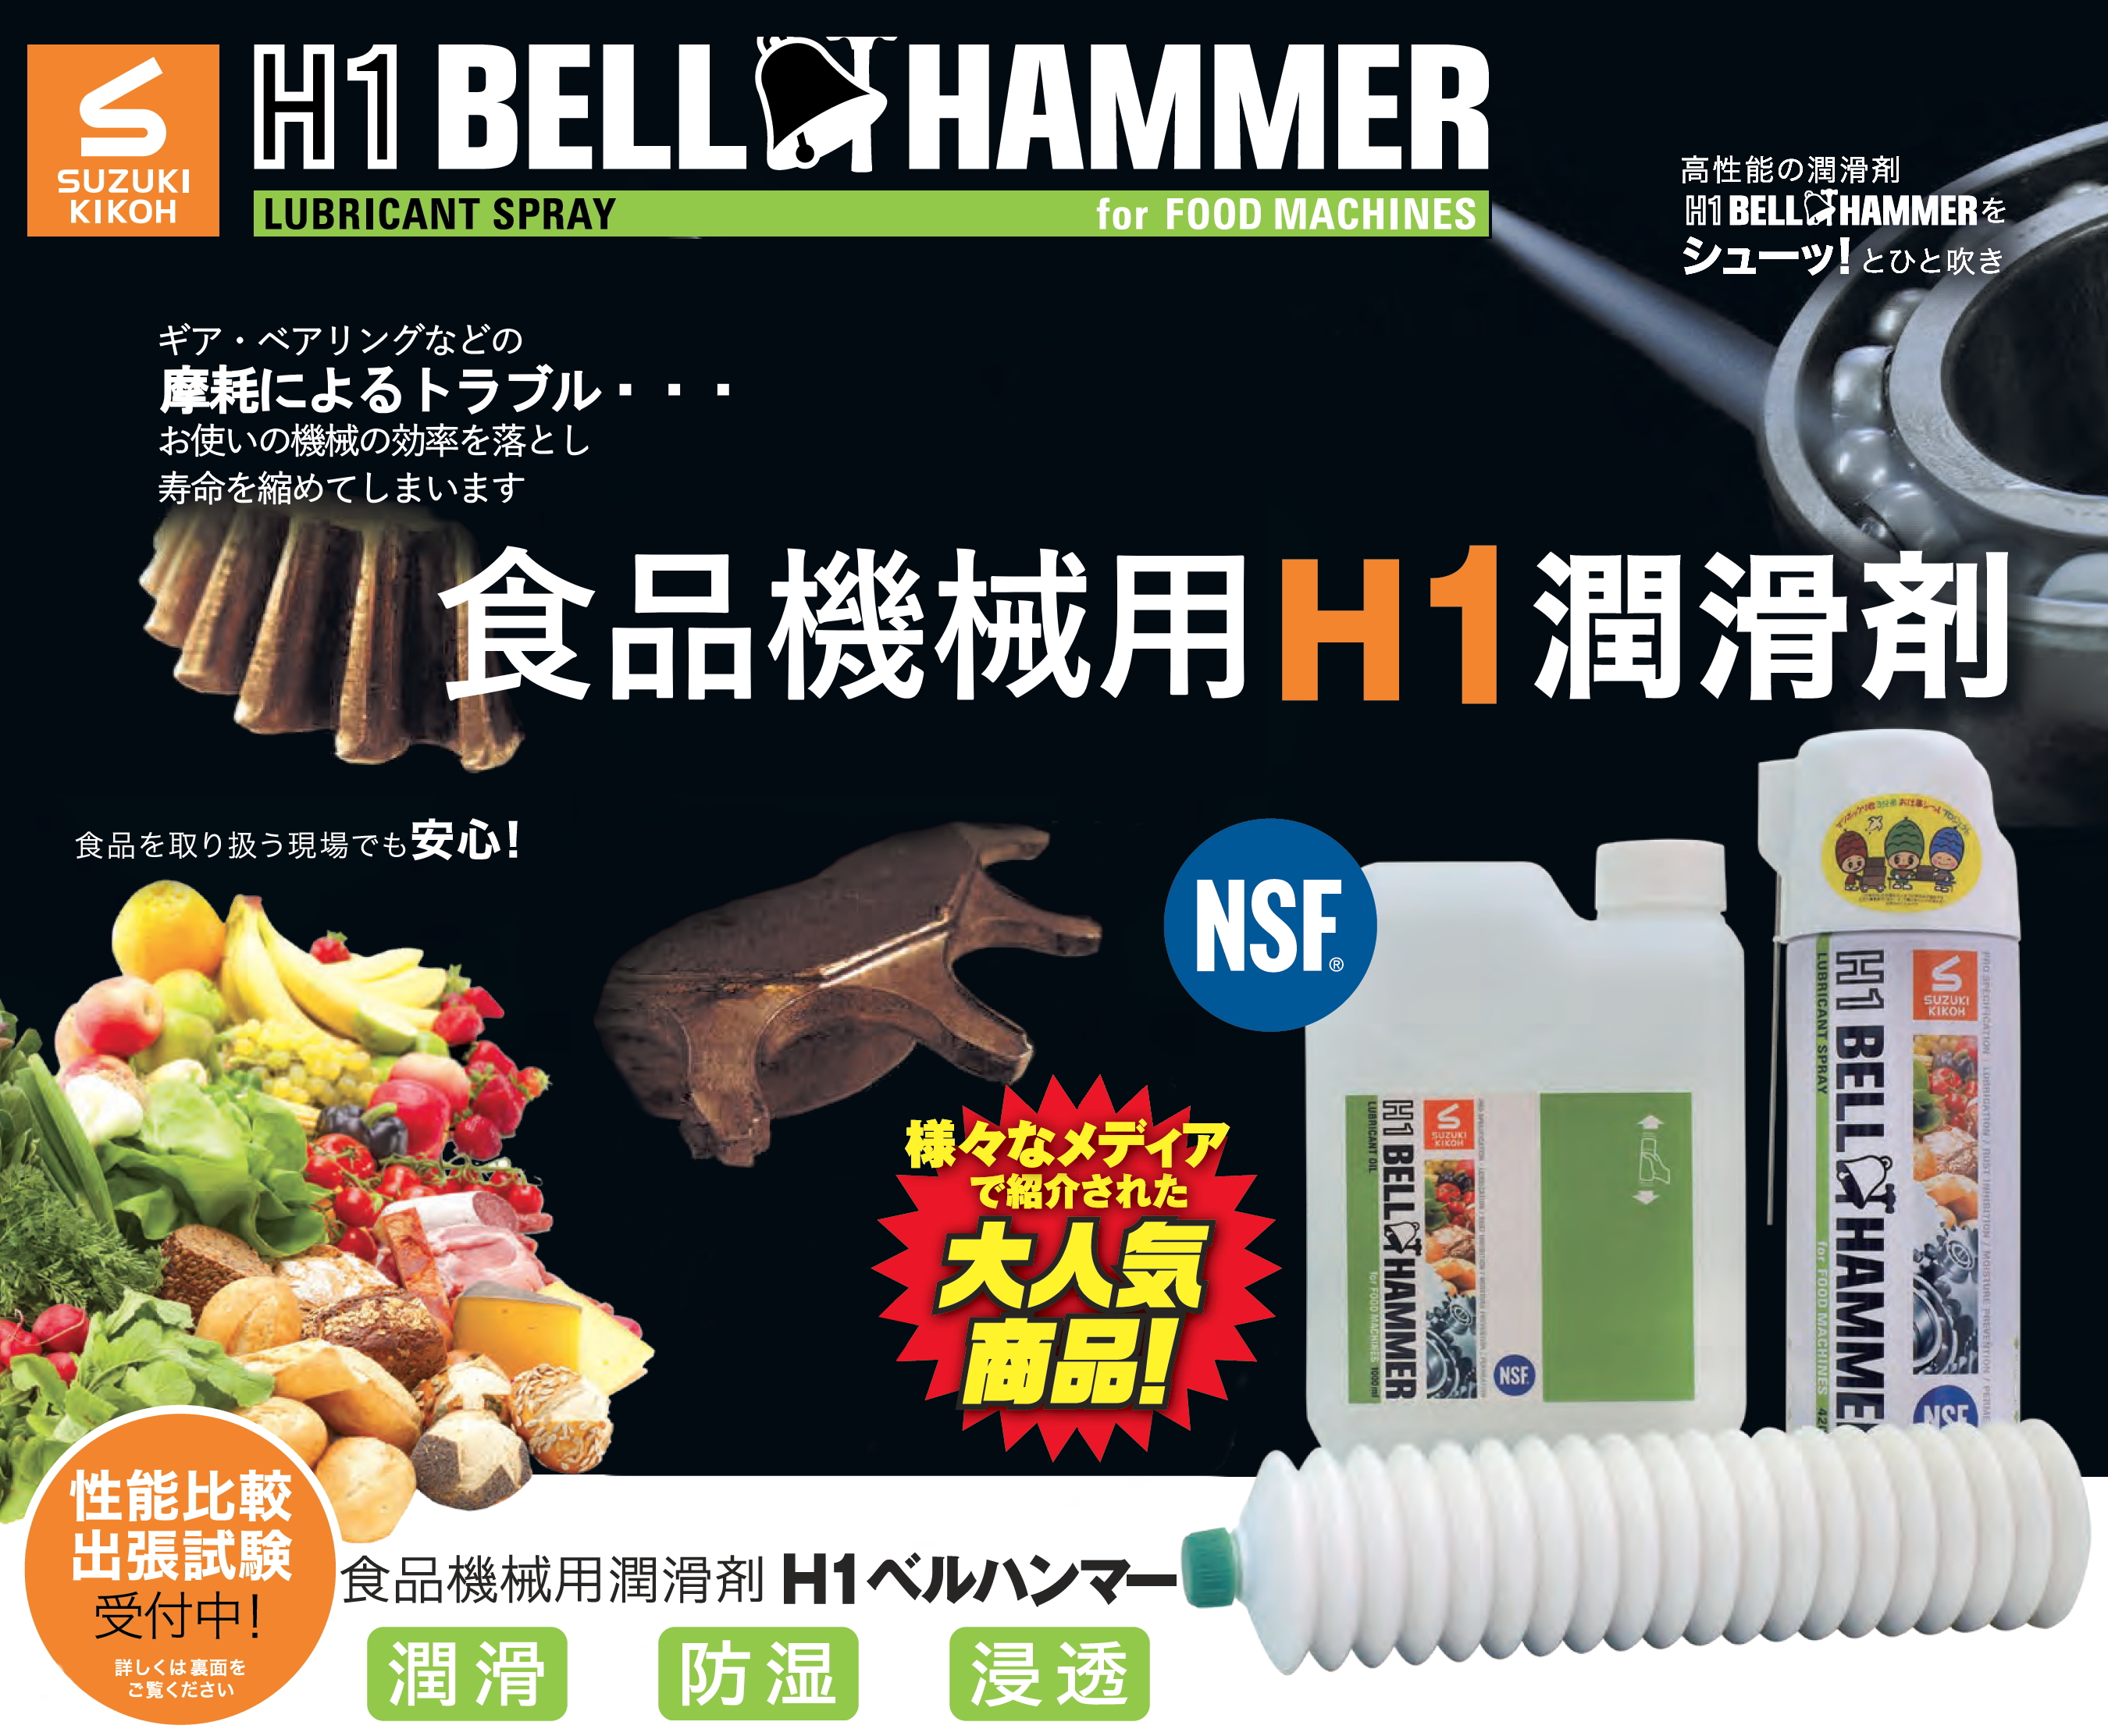 H1ベルハンマー - 食品機械用潤滑剤「潤滑」「防湿」「浸透」